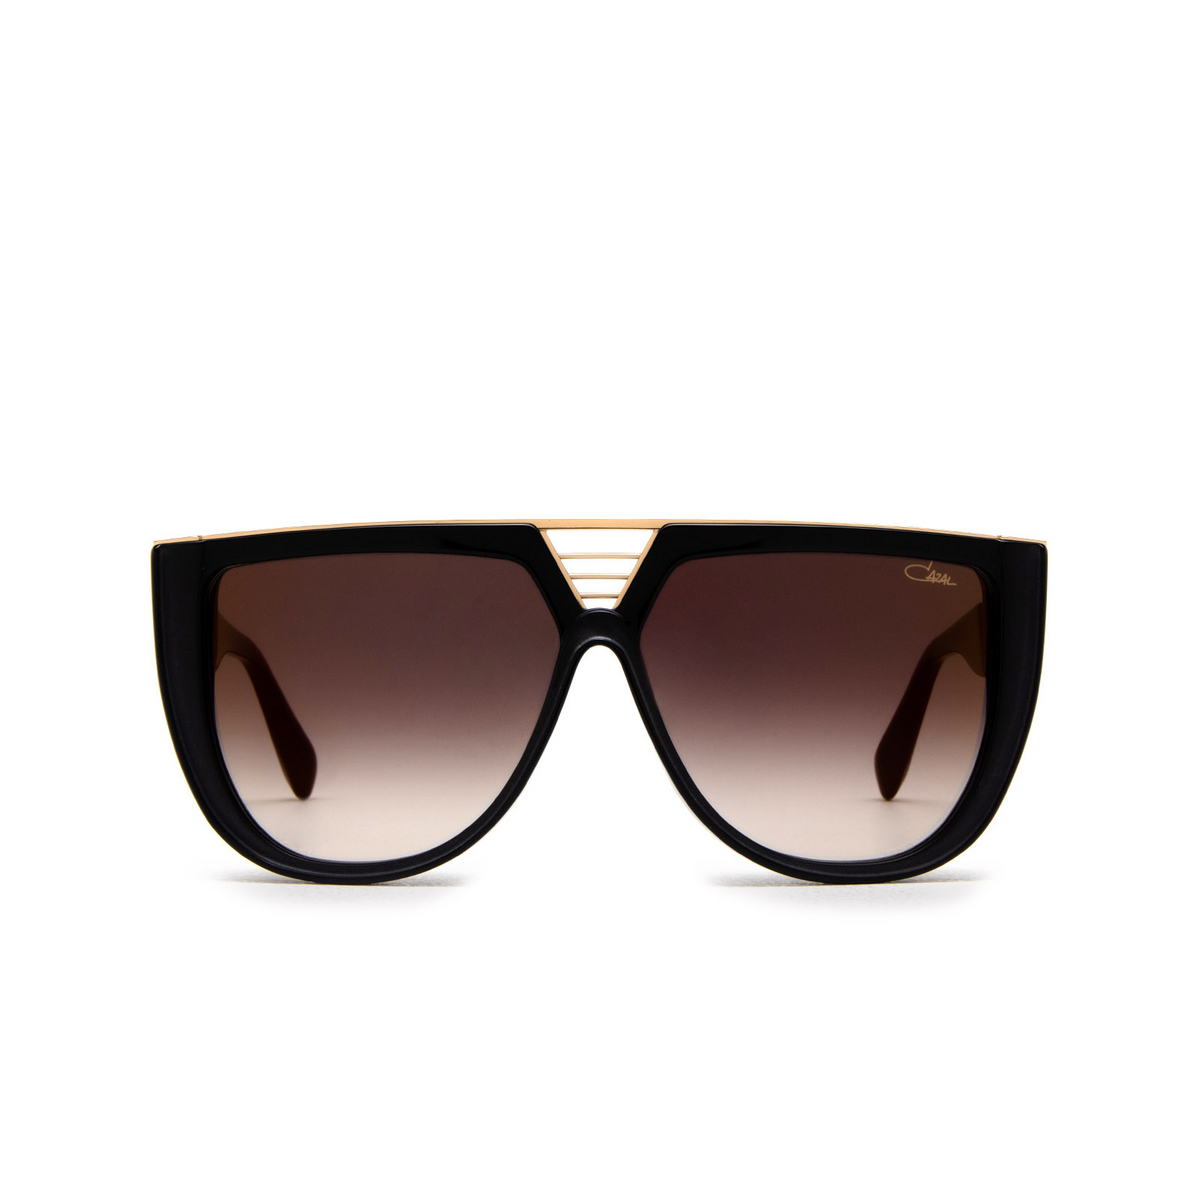 Cazal 8511 Sunglasses 001 Black - Gold - front view